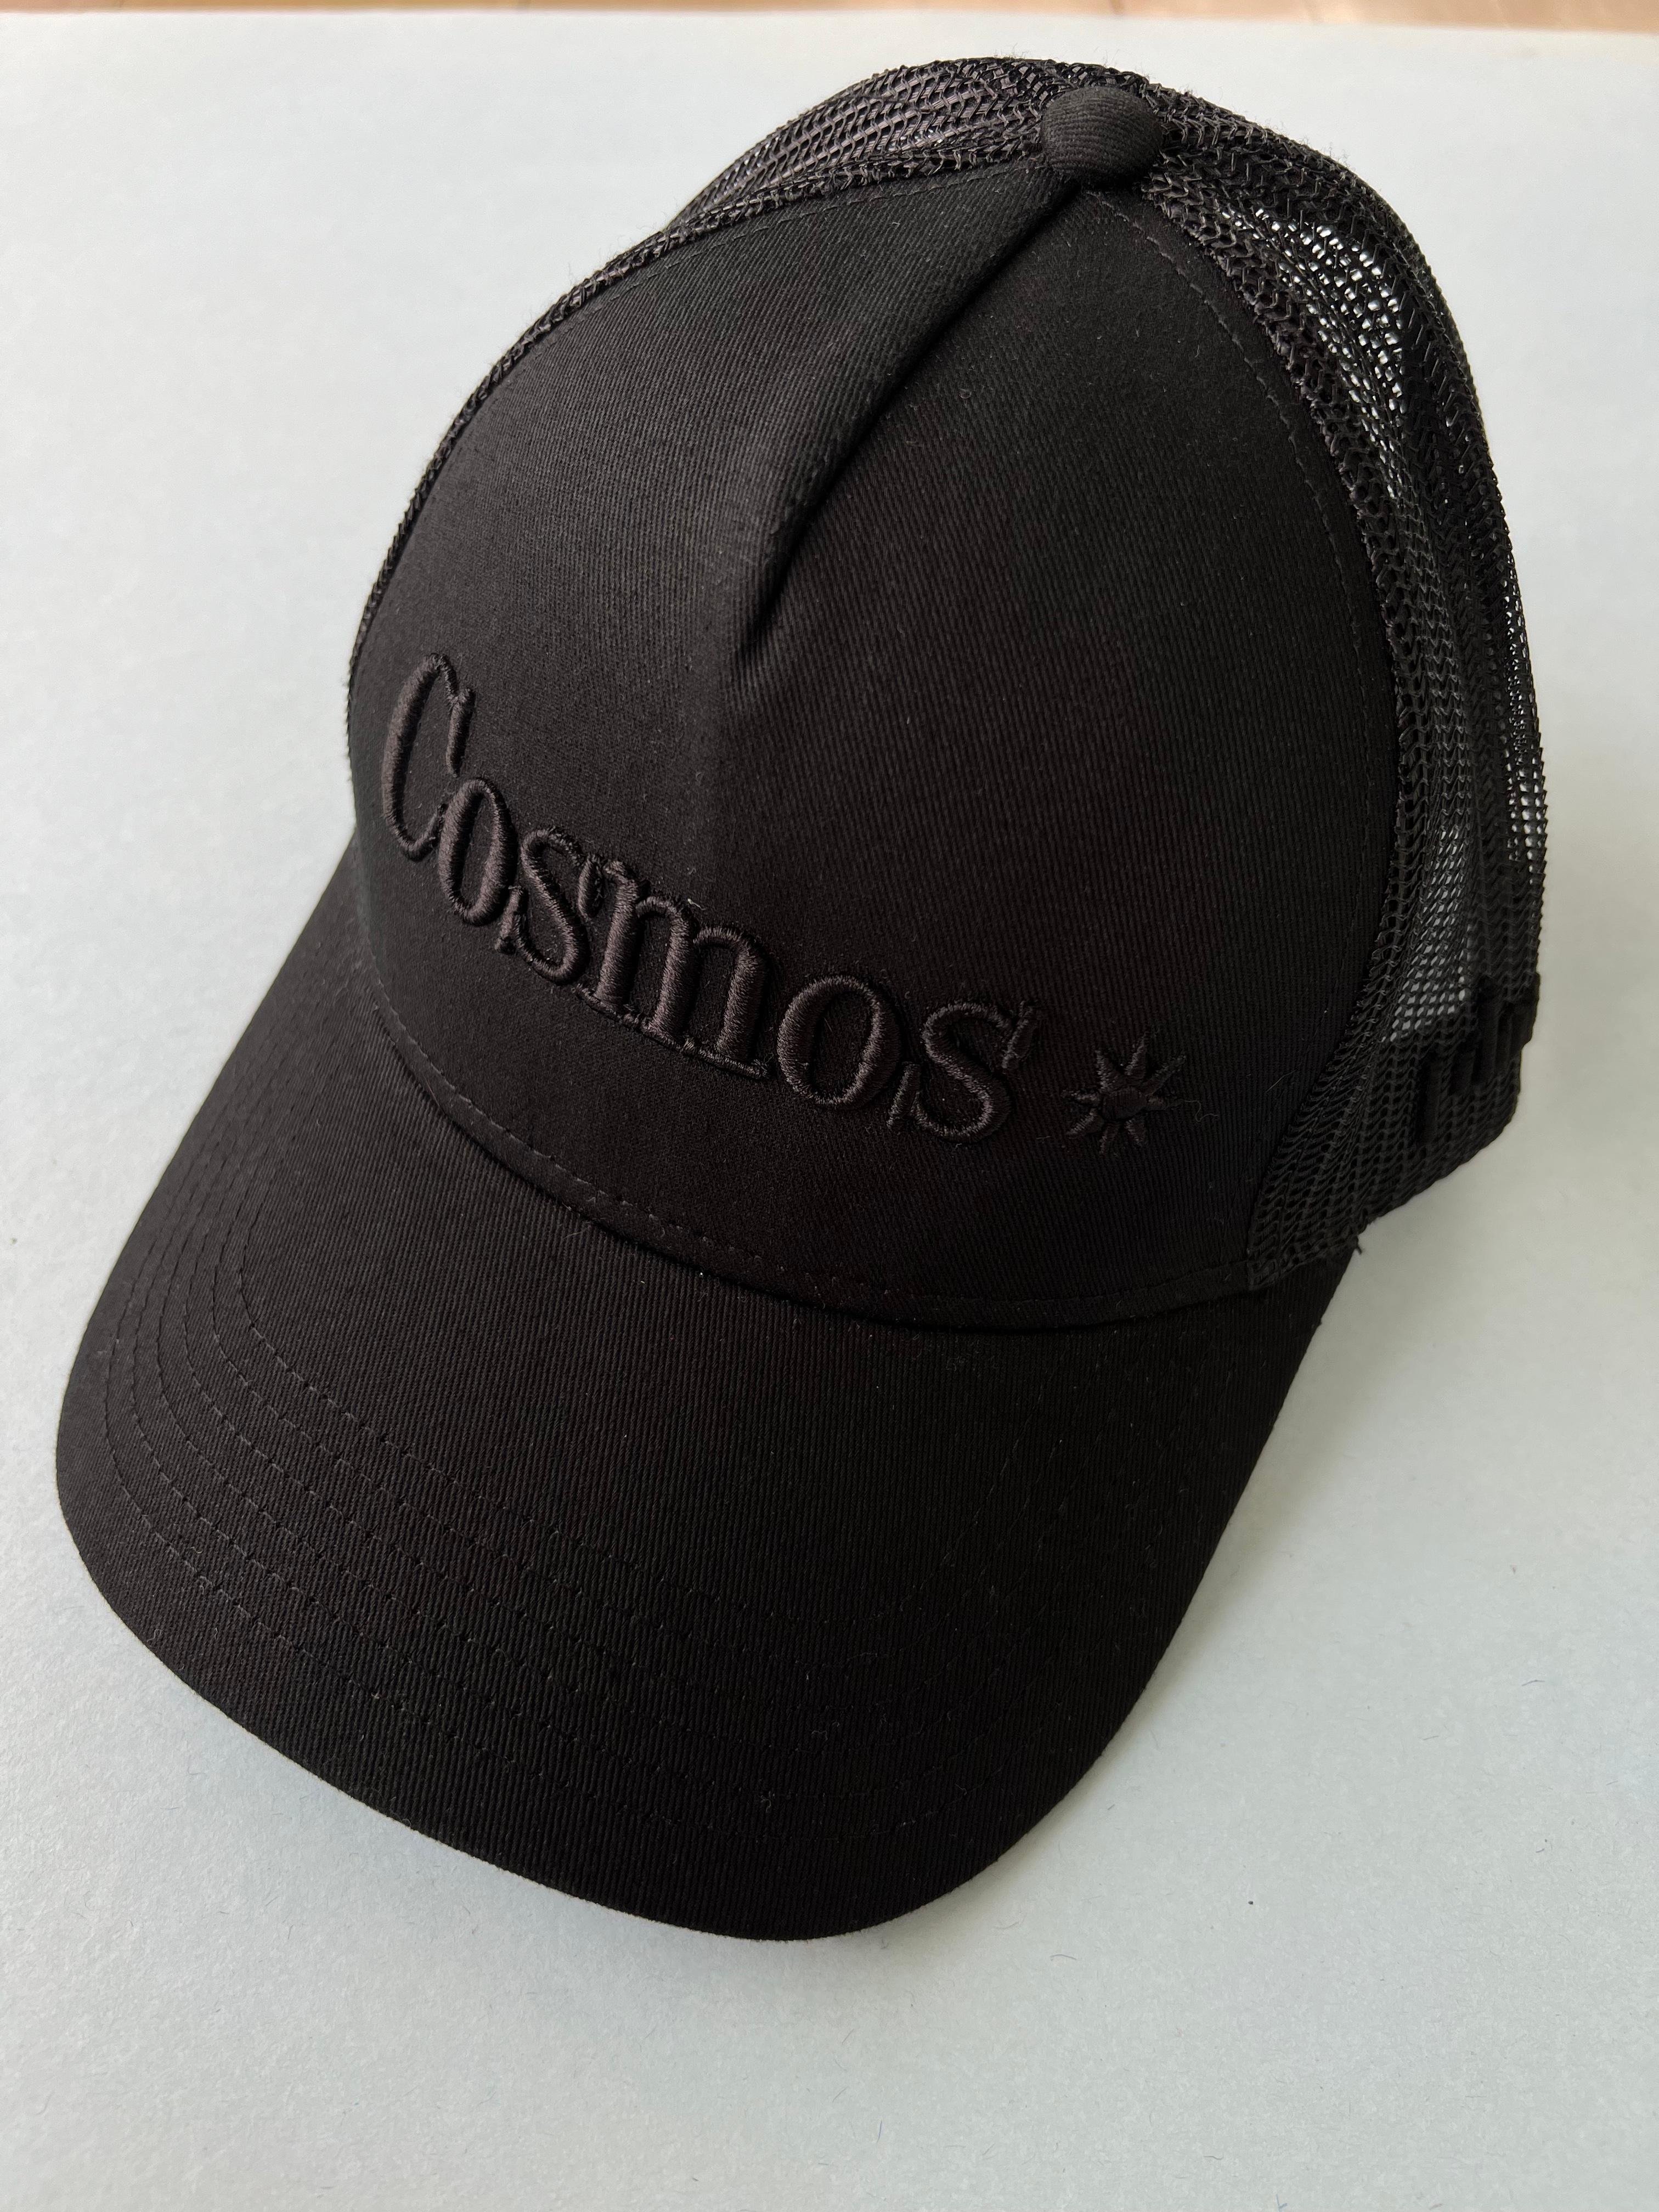 Hat Trucker Black Cosmos Embroidery J Dauphin 9